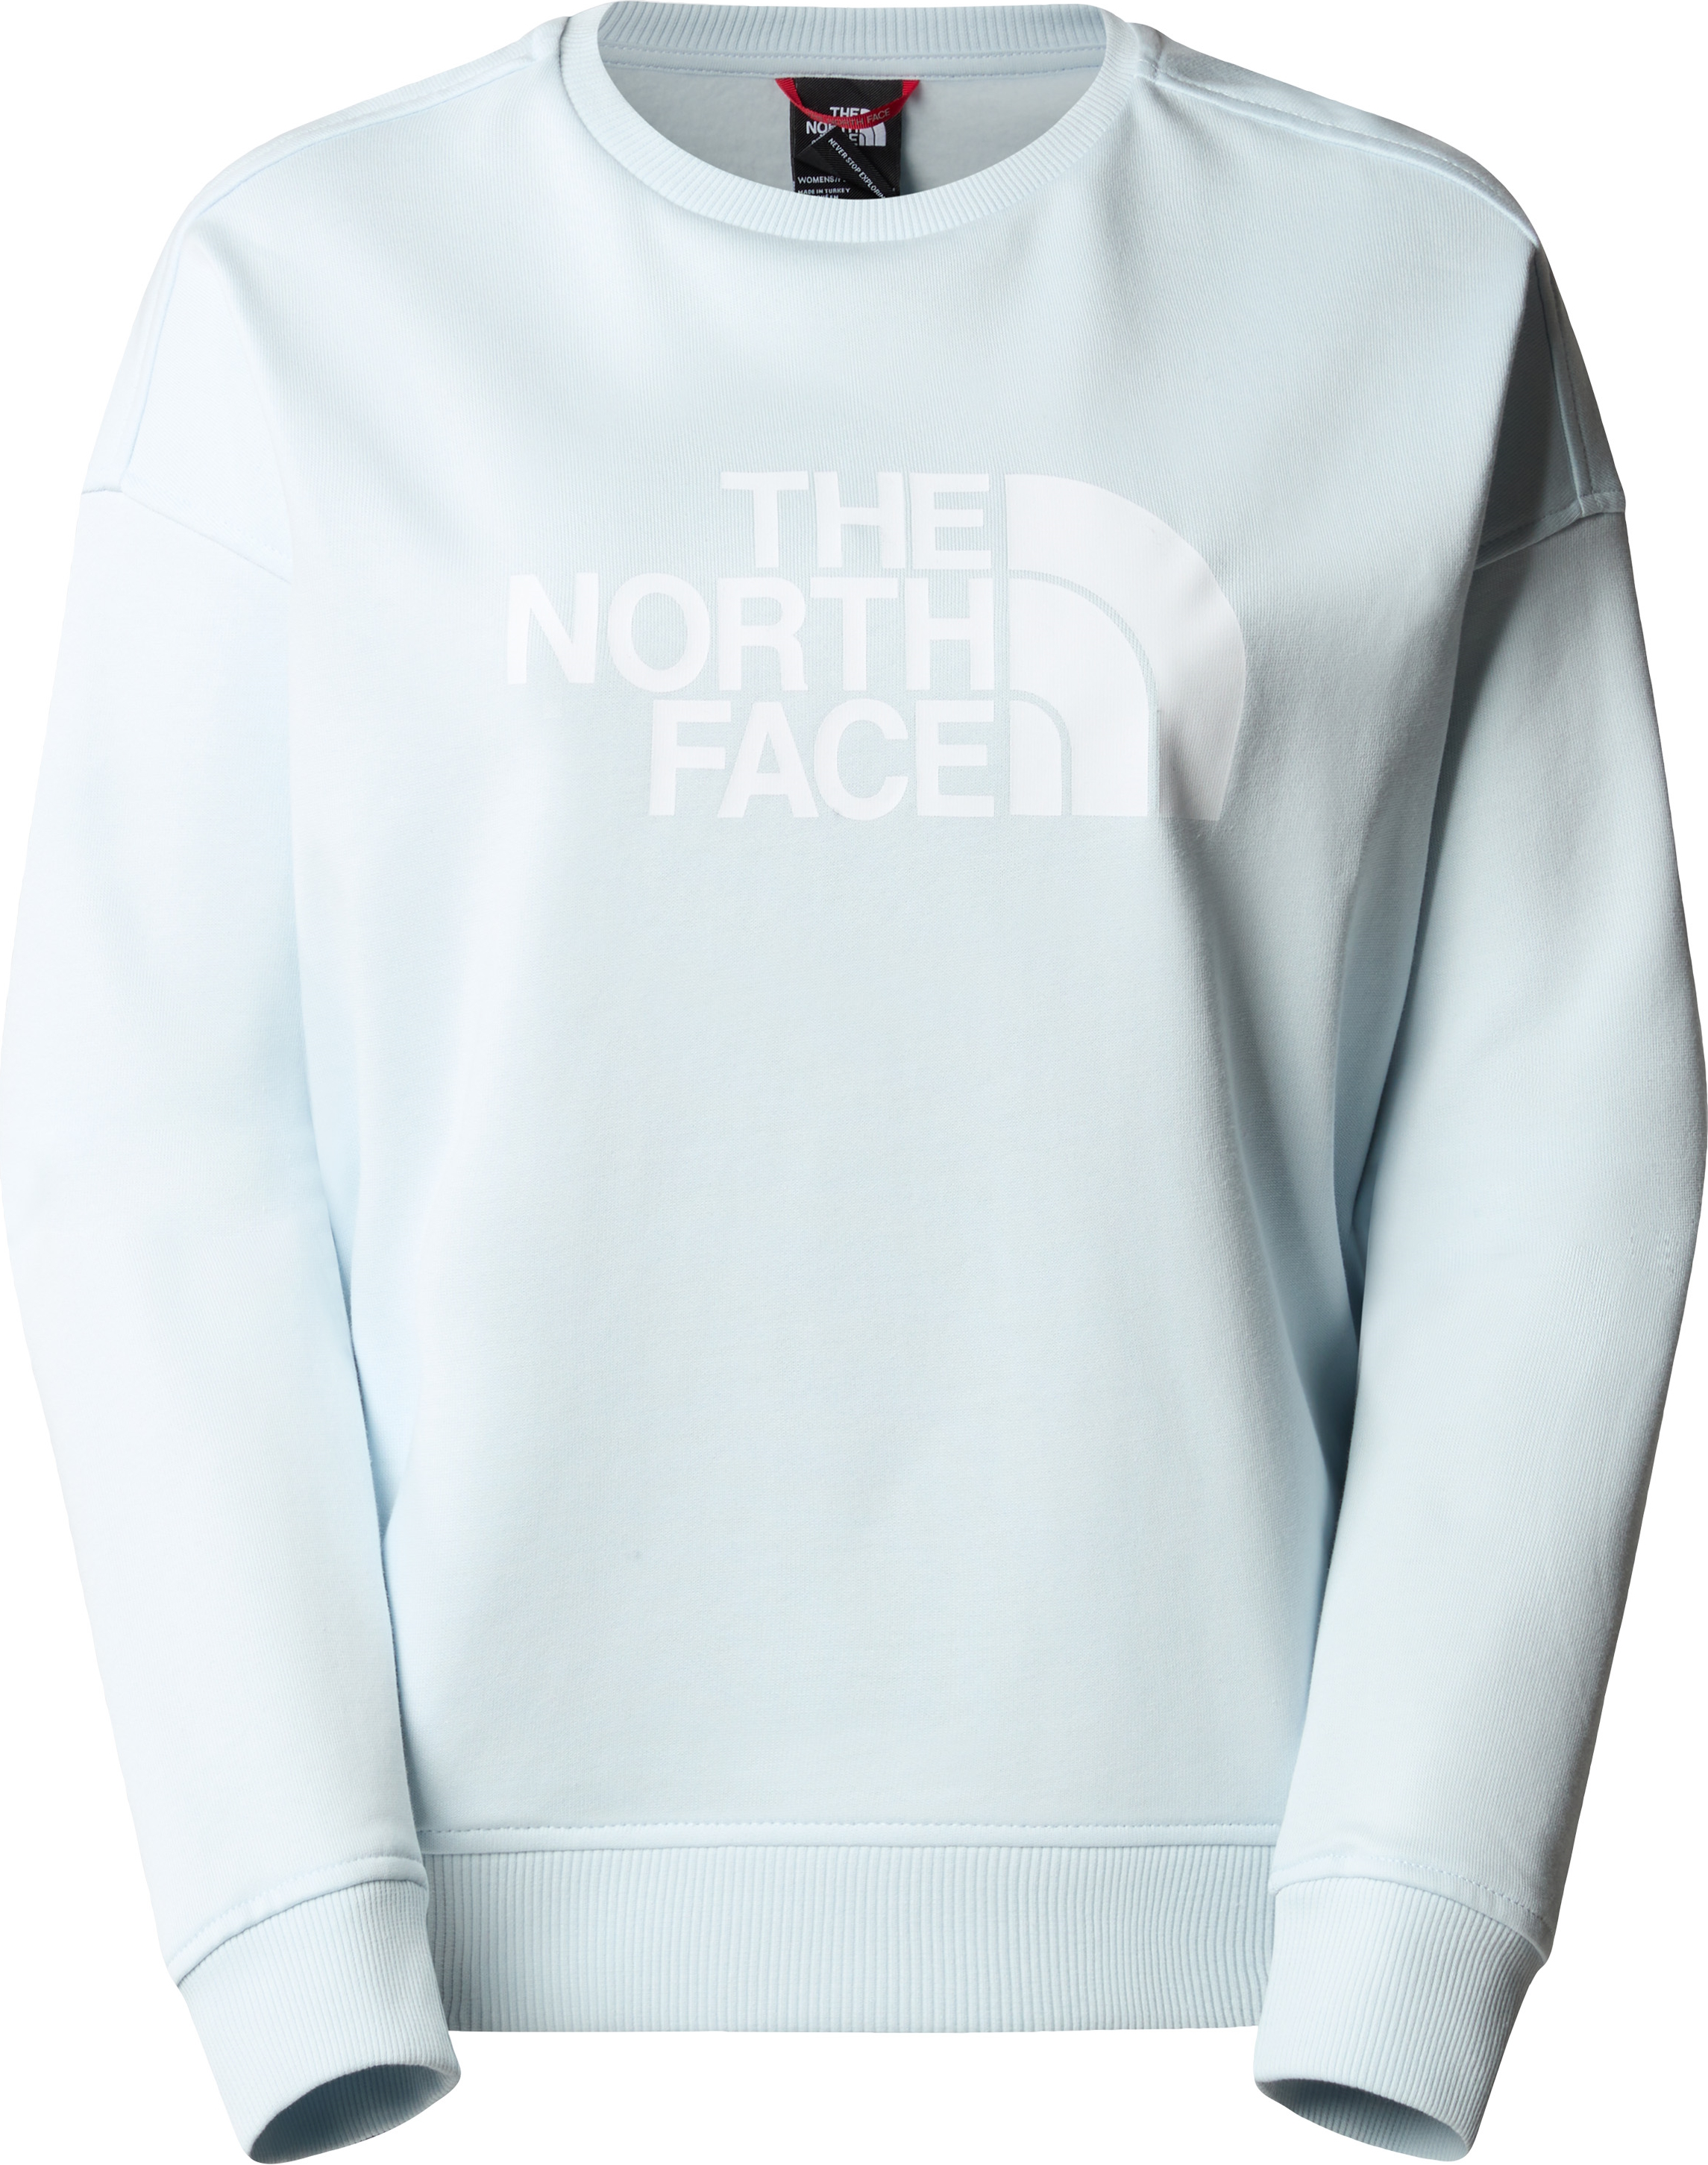 The North Face Women’s Drew Peak Crew Barely Blue